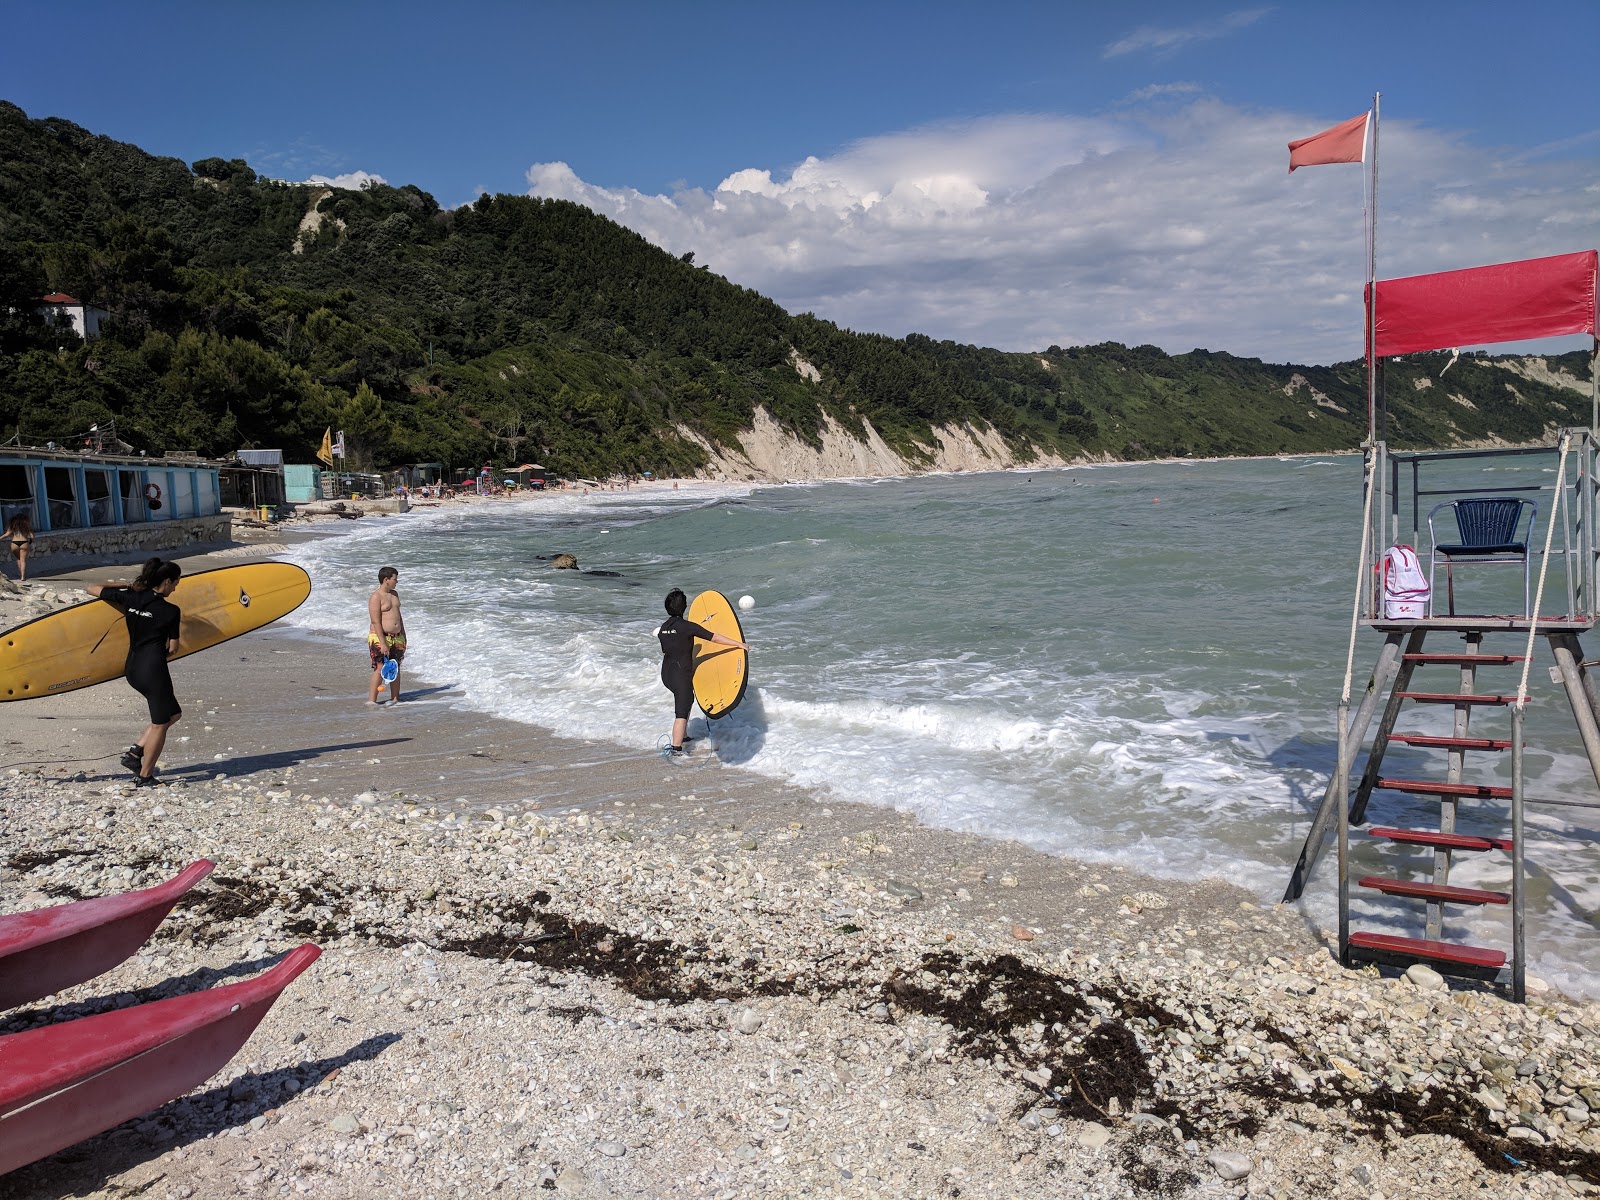 Photo of Spiaggia di Portonovo - popular place among relax connoisseurs